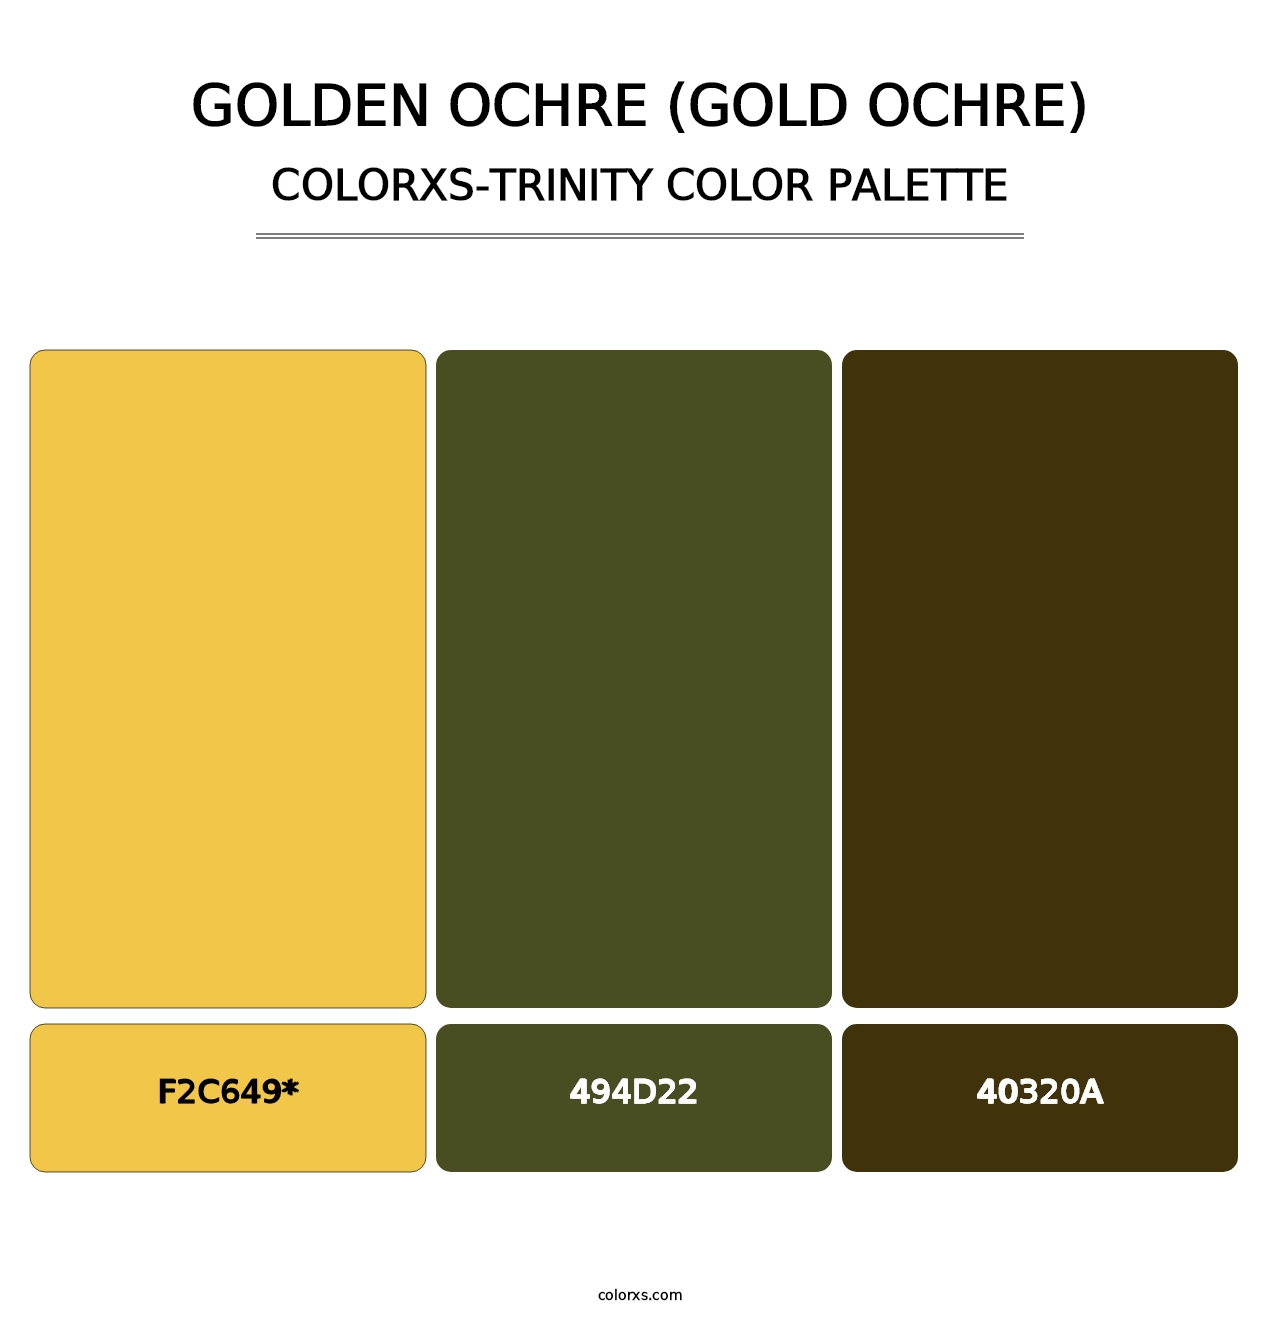 Golden Ochre (Gold Ochre) - Colorxs Trinity Palette